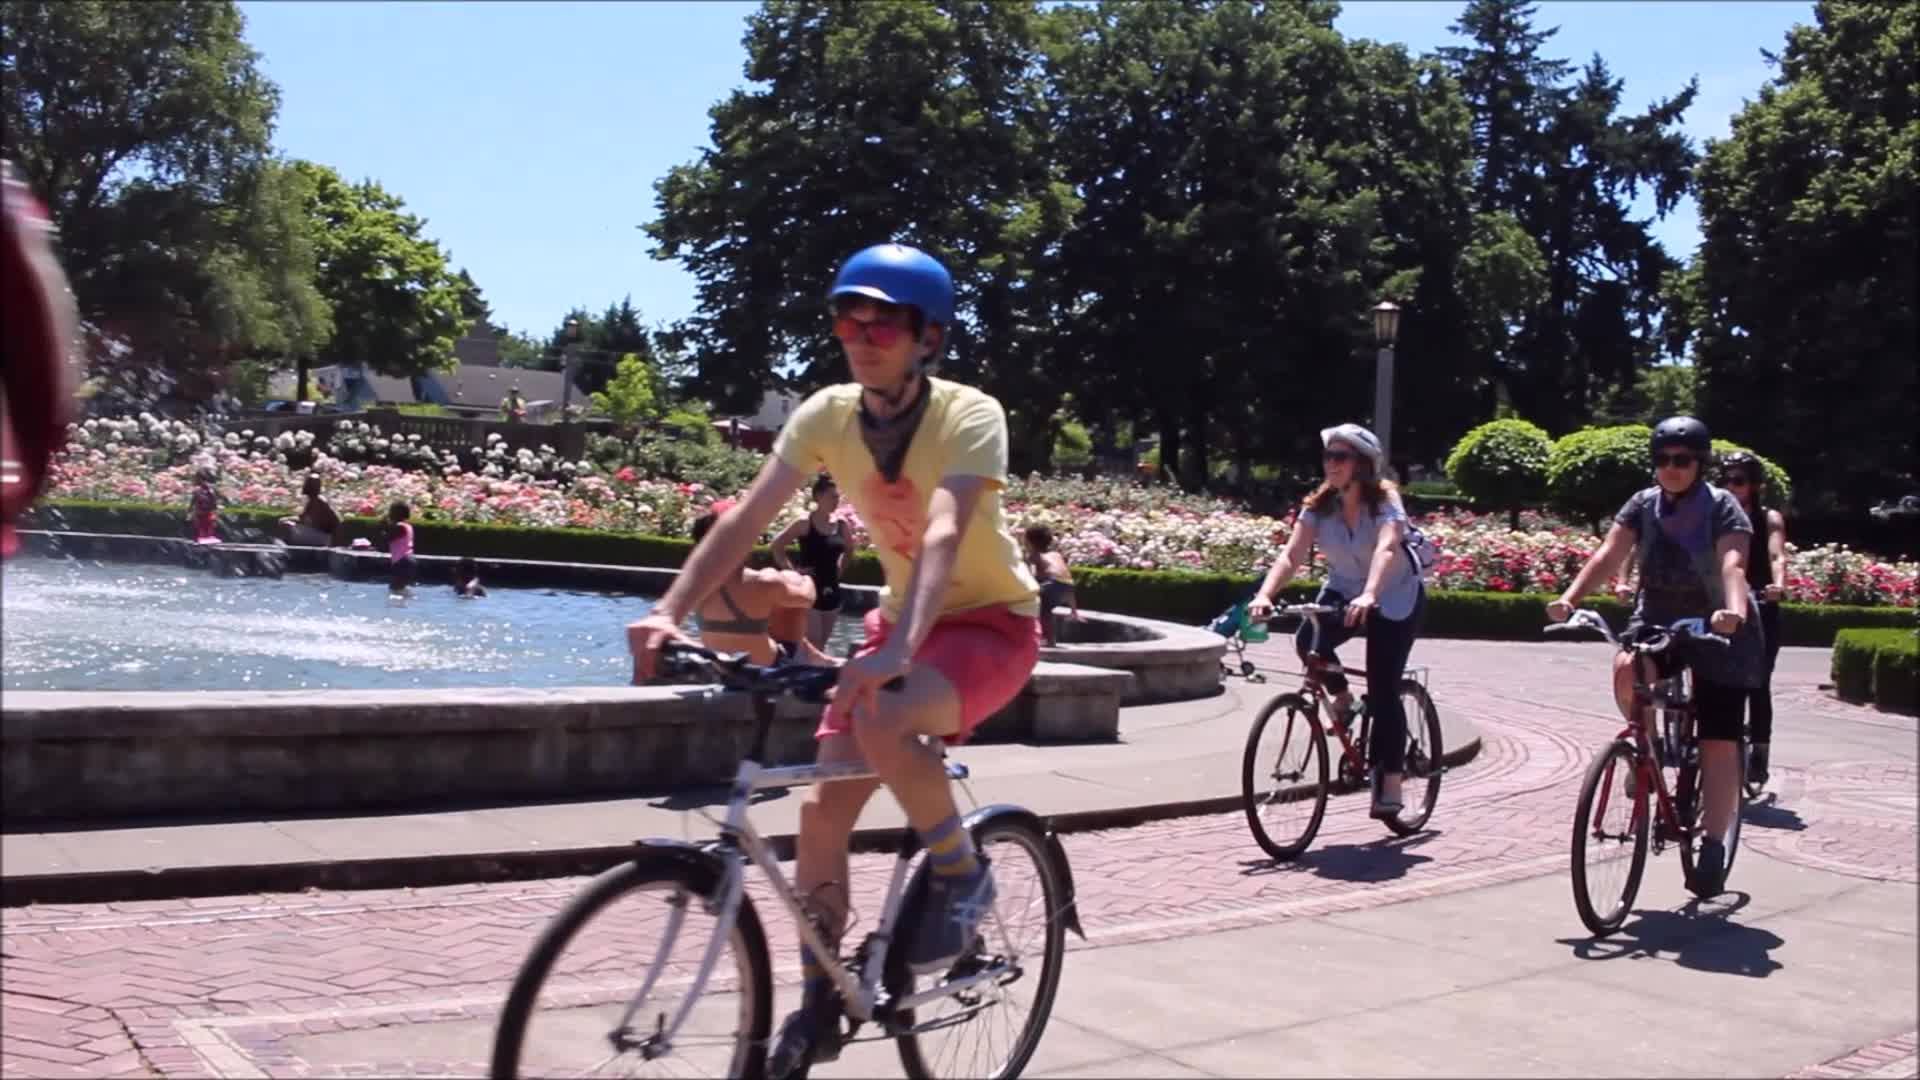 Bike riders around a fountain